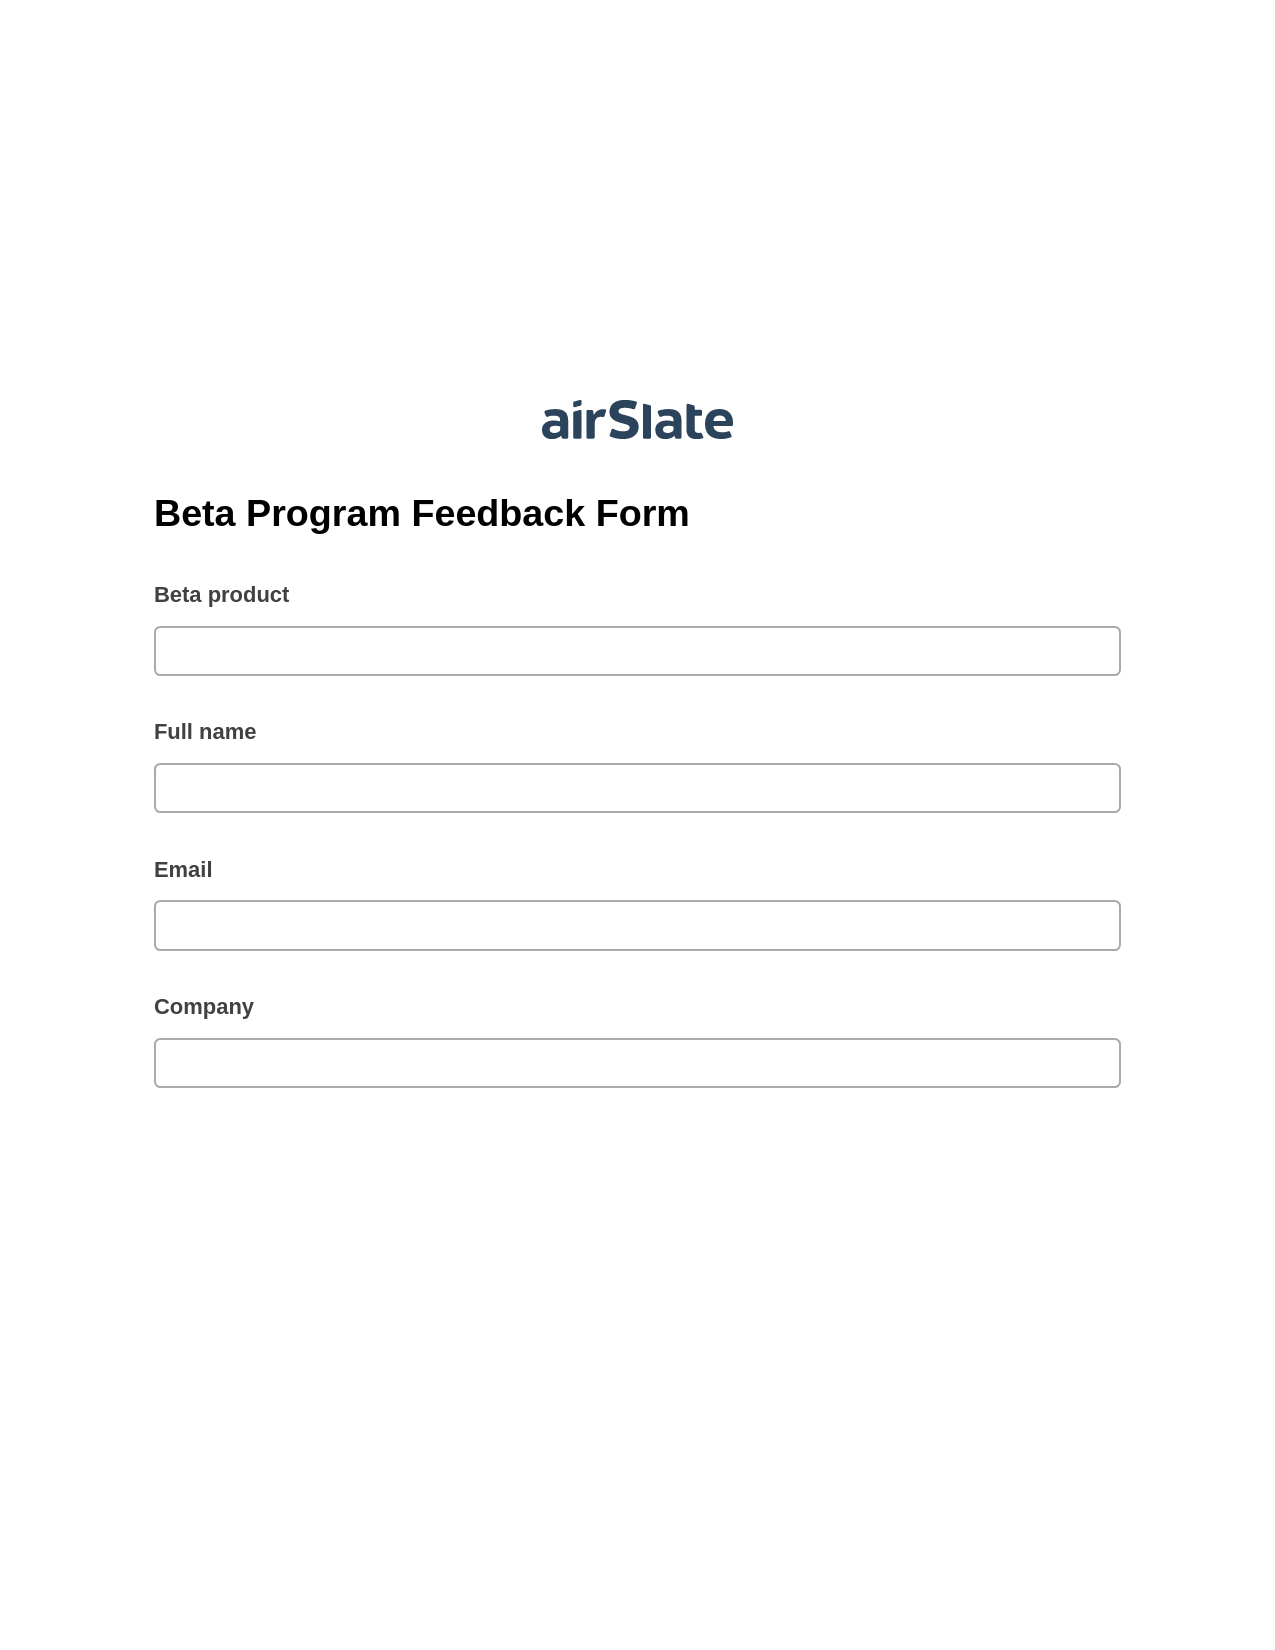 Multirole Beta Program Feedback Form Pre-fill from Salesforce Record Bot, Assign Slate Name Bot, OneDrive Bot